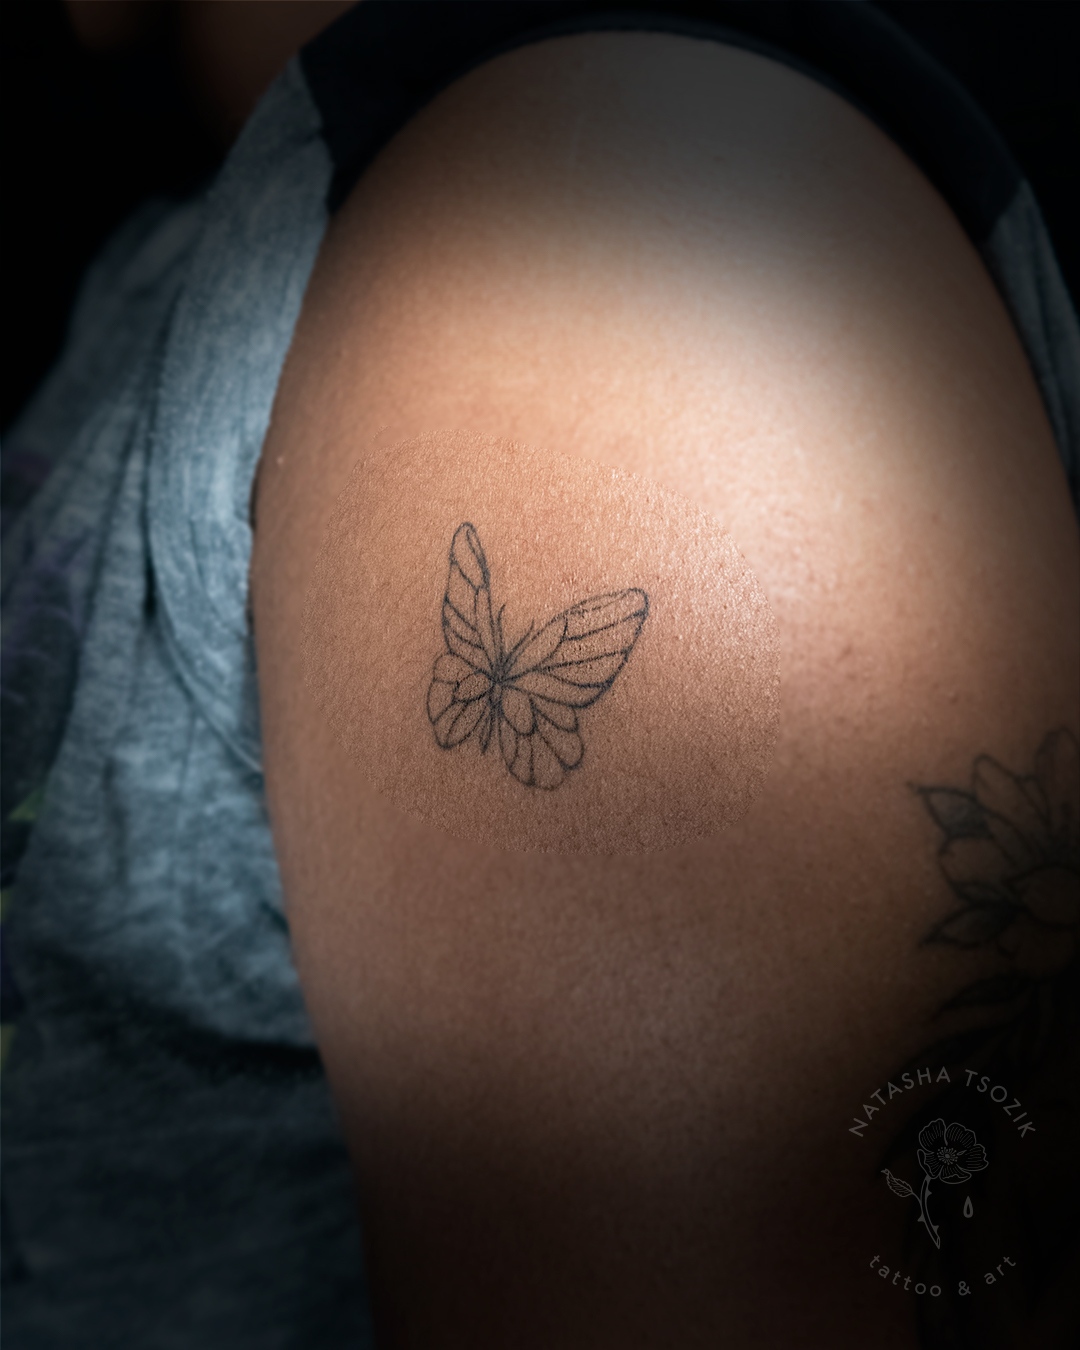 Butterfly small tattoo on arm by Natasha Tsozik